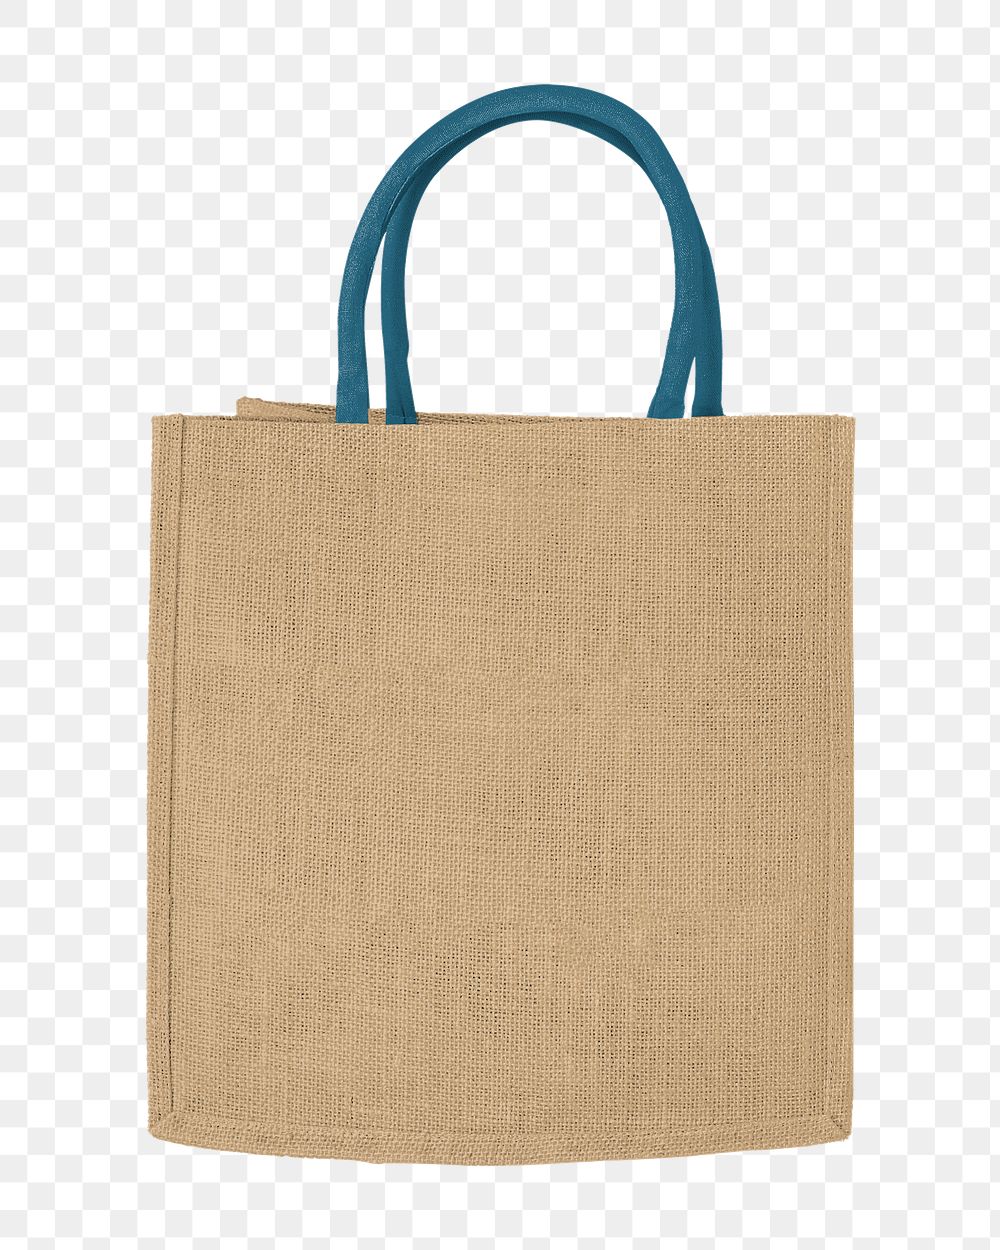 Eco-friendly bag png reusable, transparent background